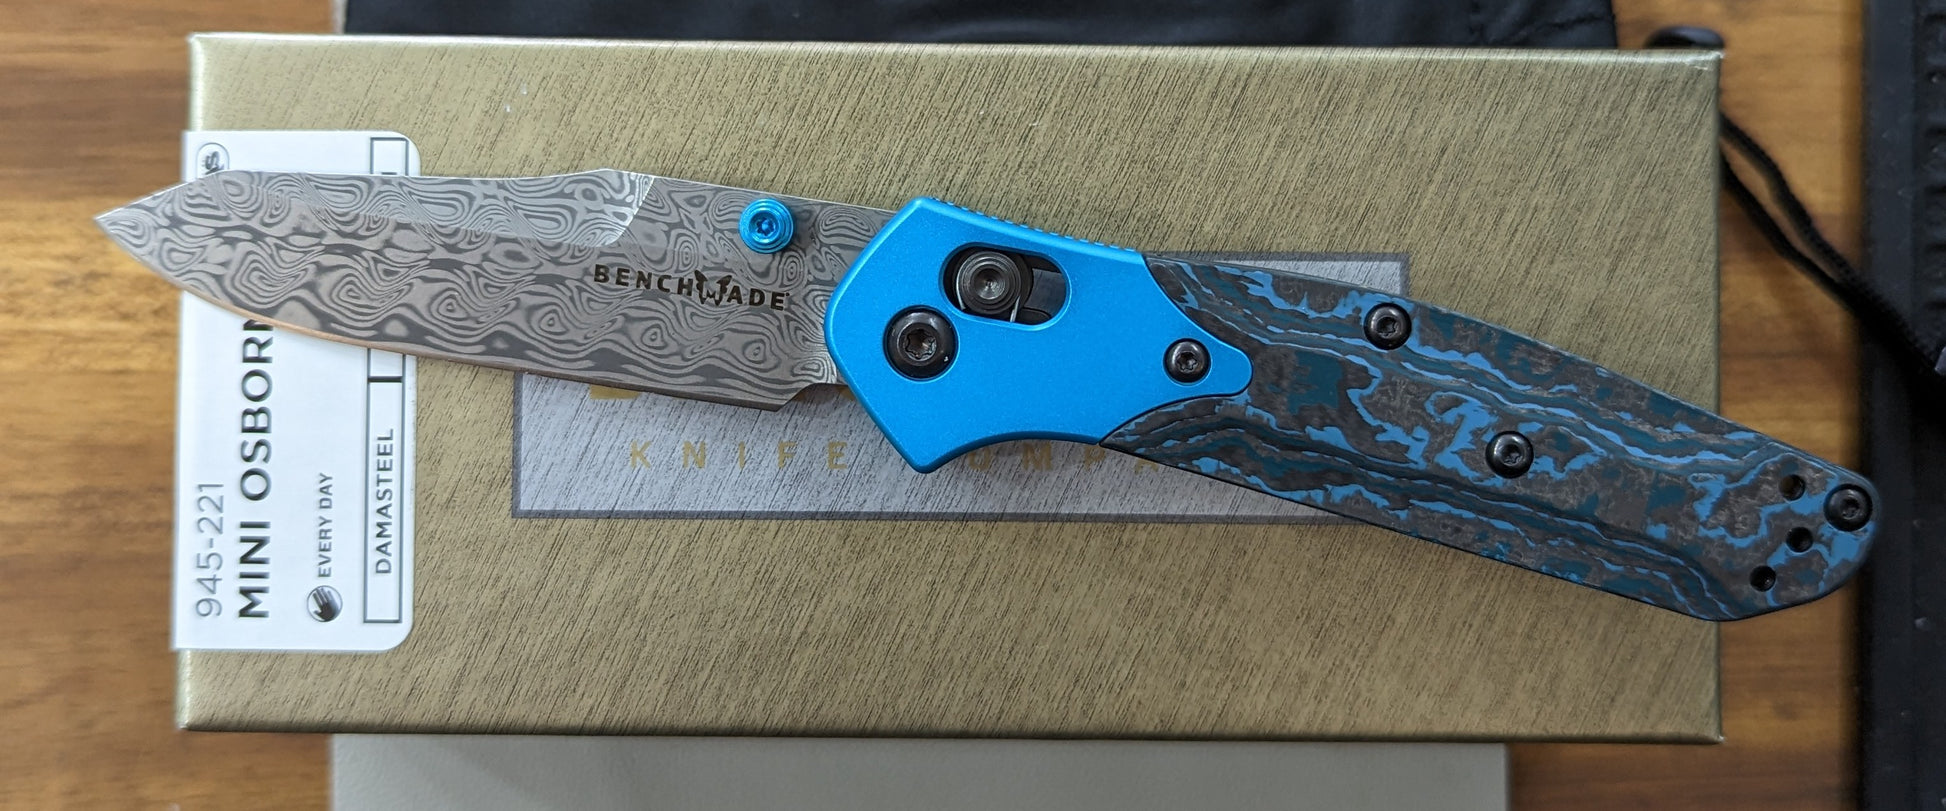 Benchmade Gold Class Mini Osborne Folding Knife 2.92 Reverse Tanto